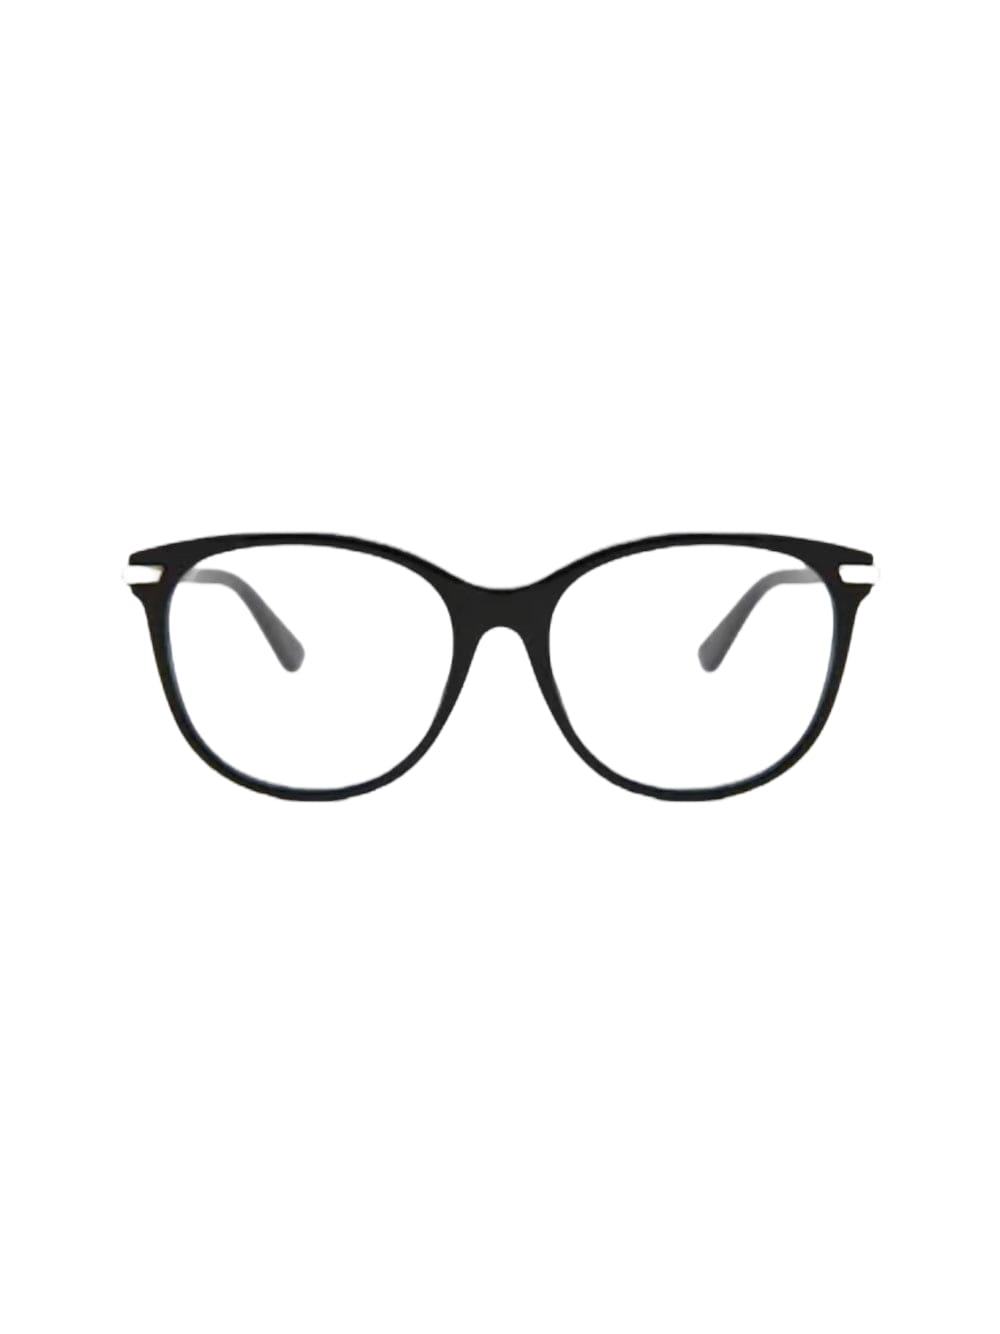 Essence - Black Glasses